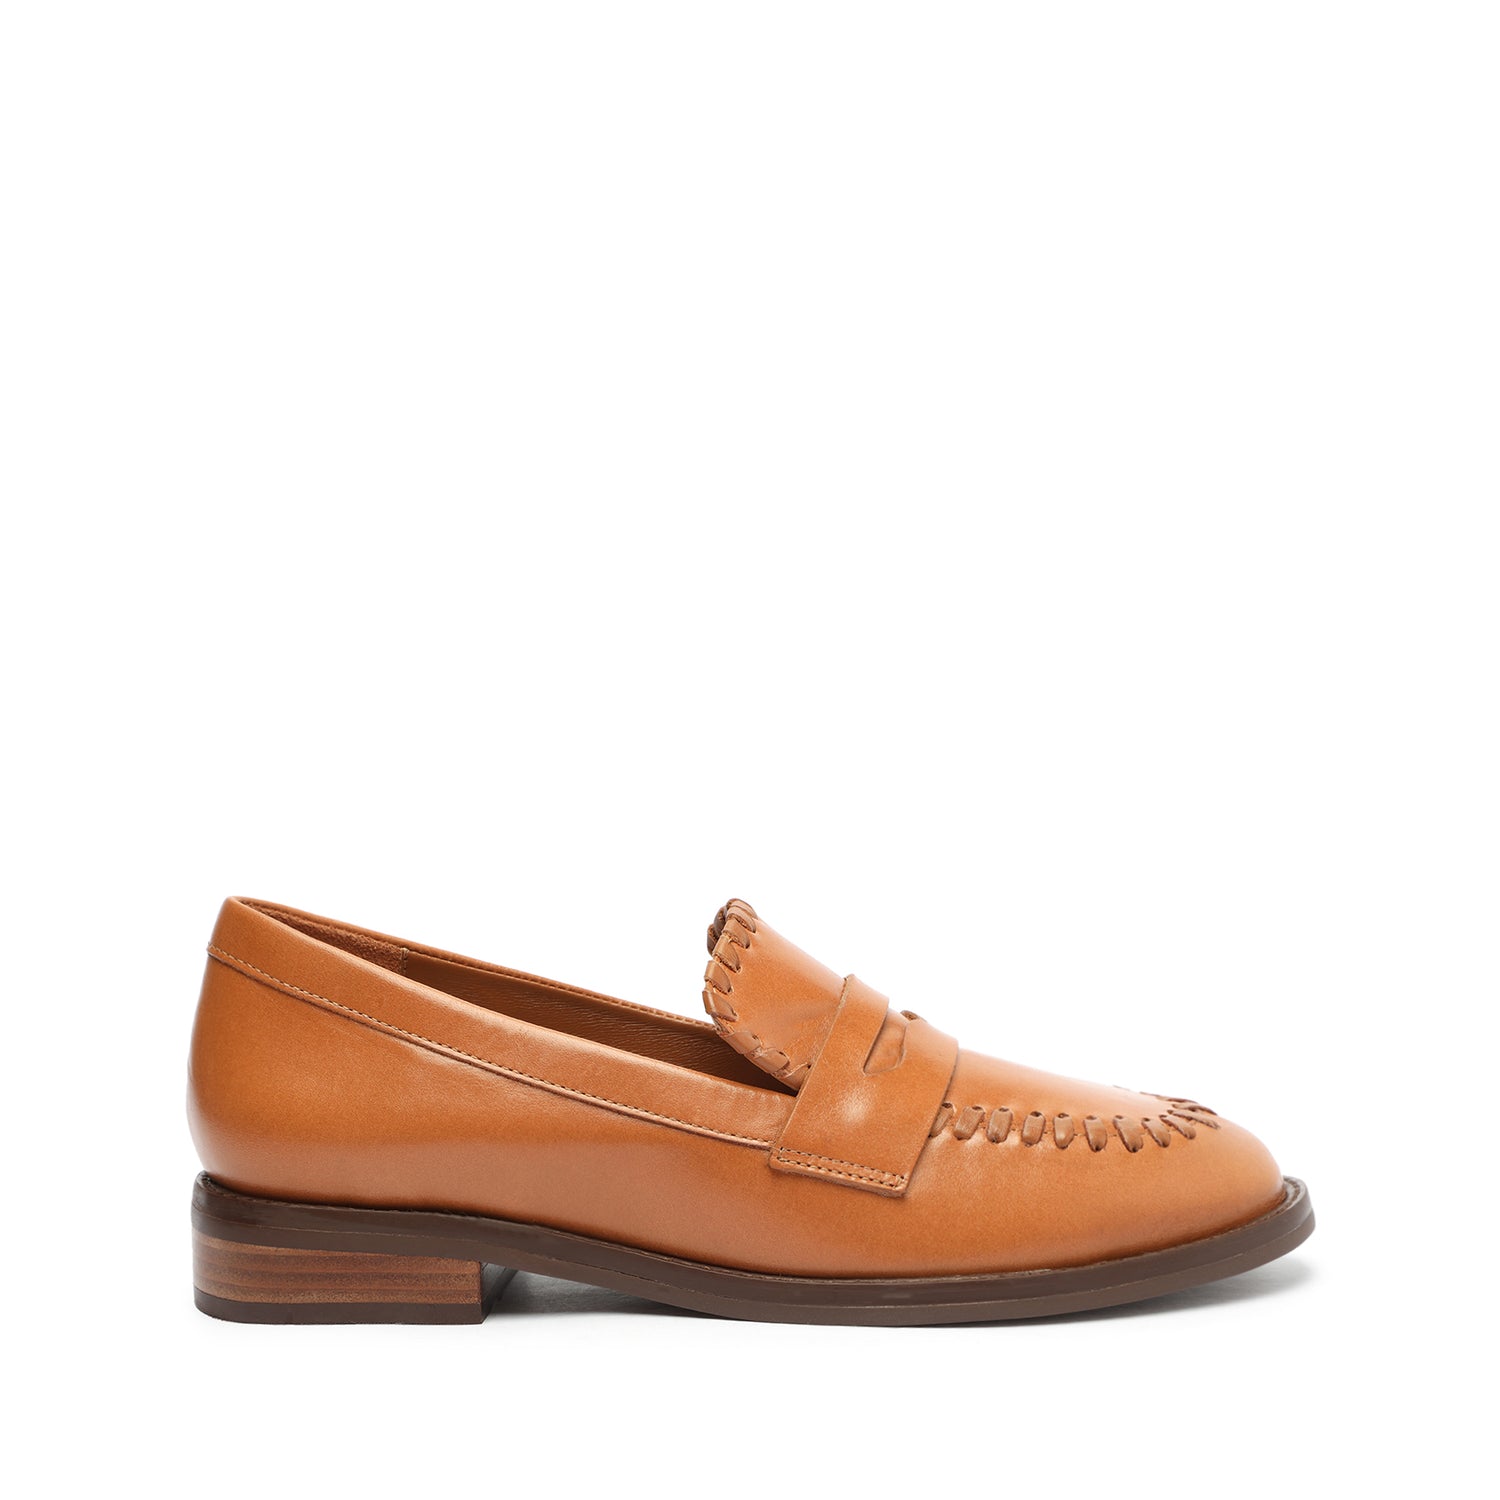 Lenon Leather Flat Flats FALL 23 5 Honey Peach Leather - Schutz Shoes